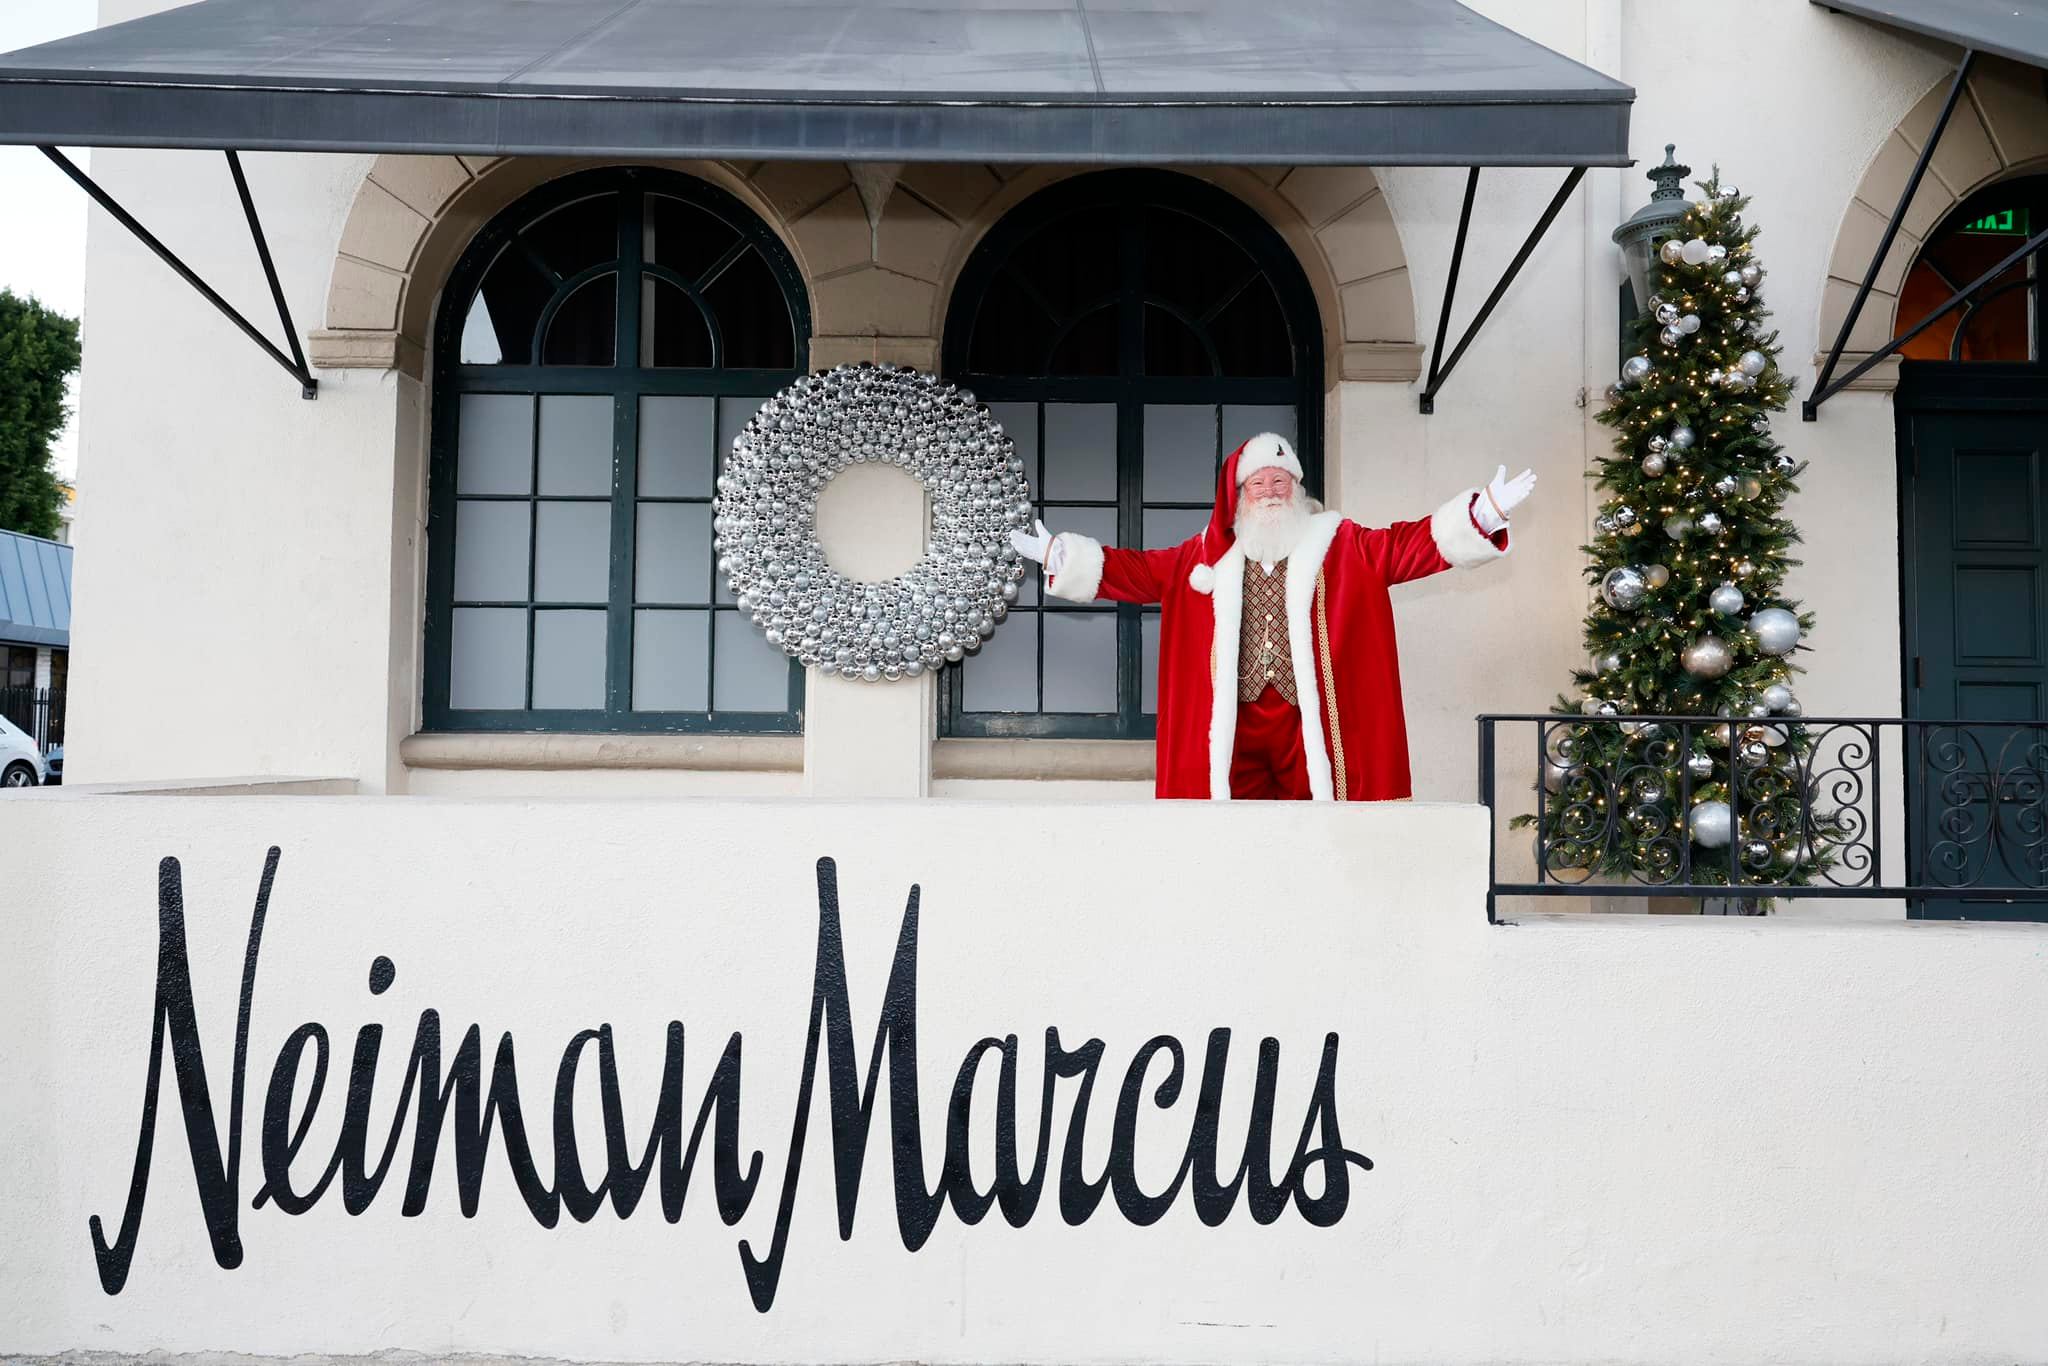 neiman marcus holiday campaign, santa